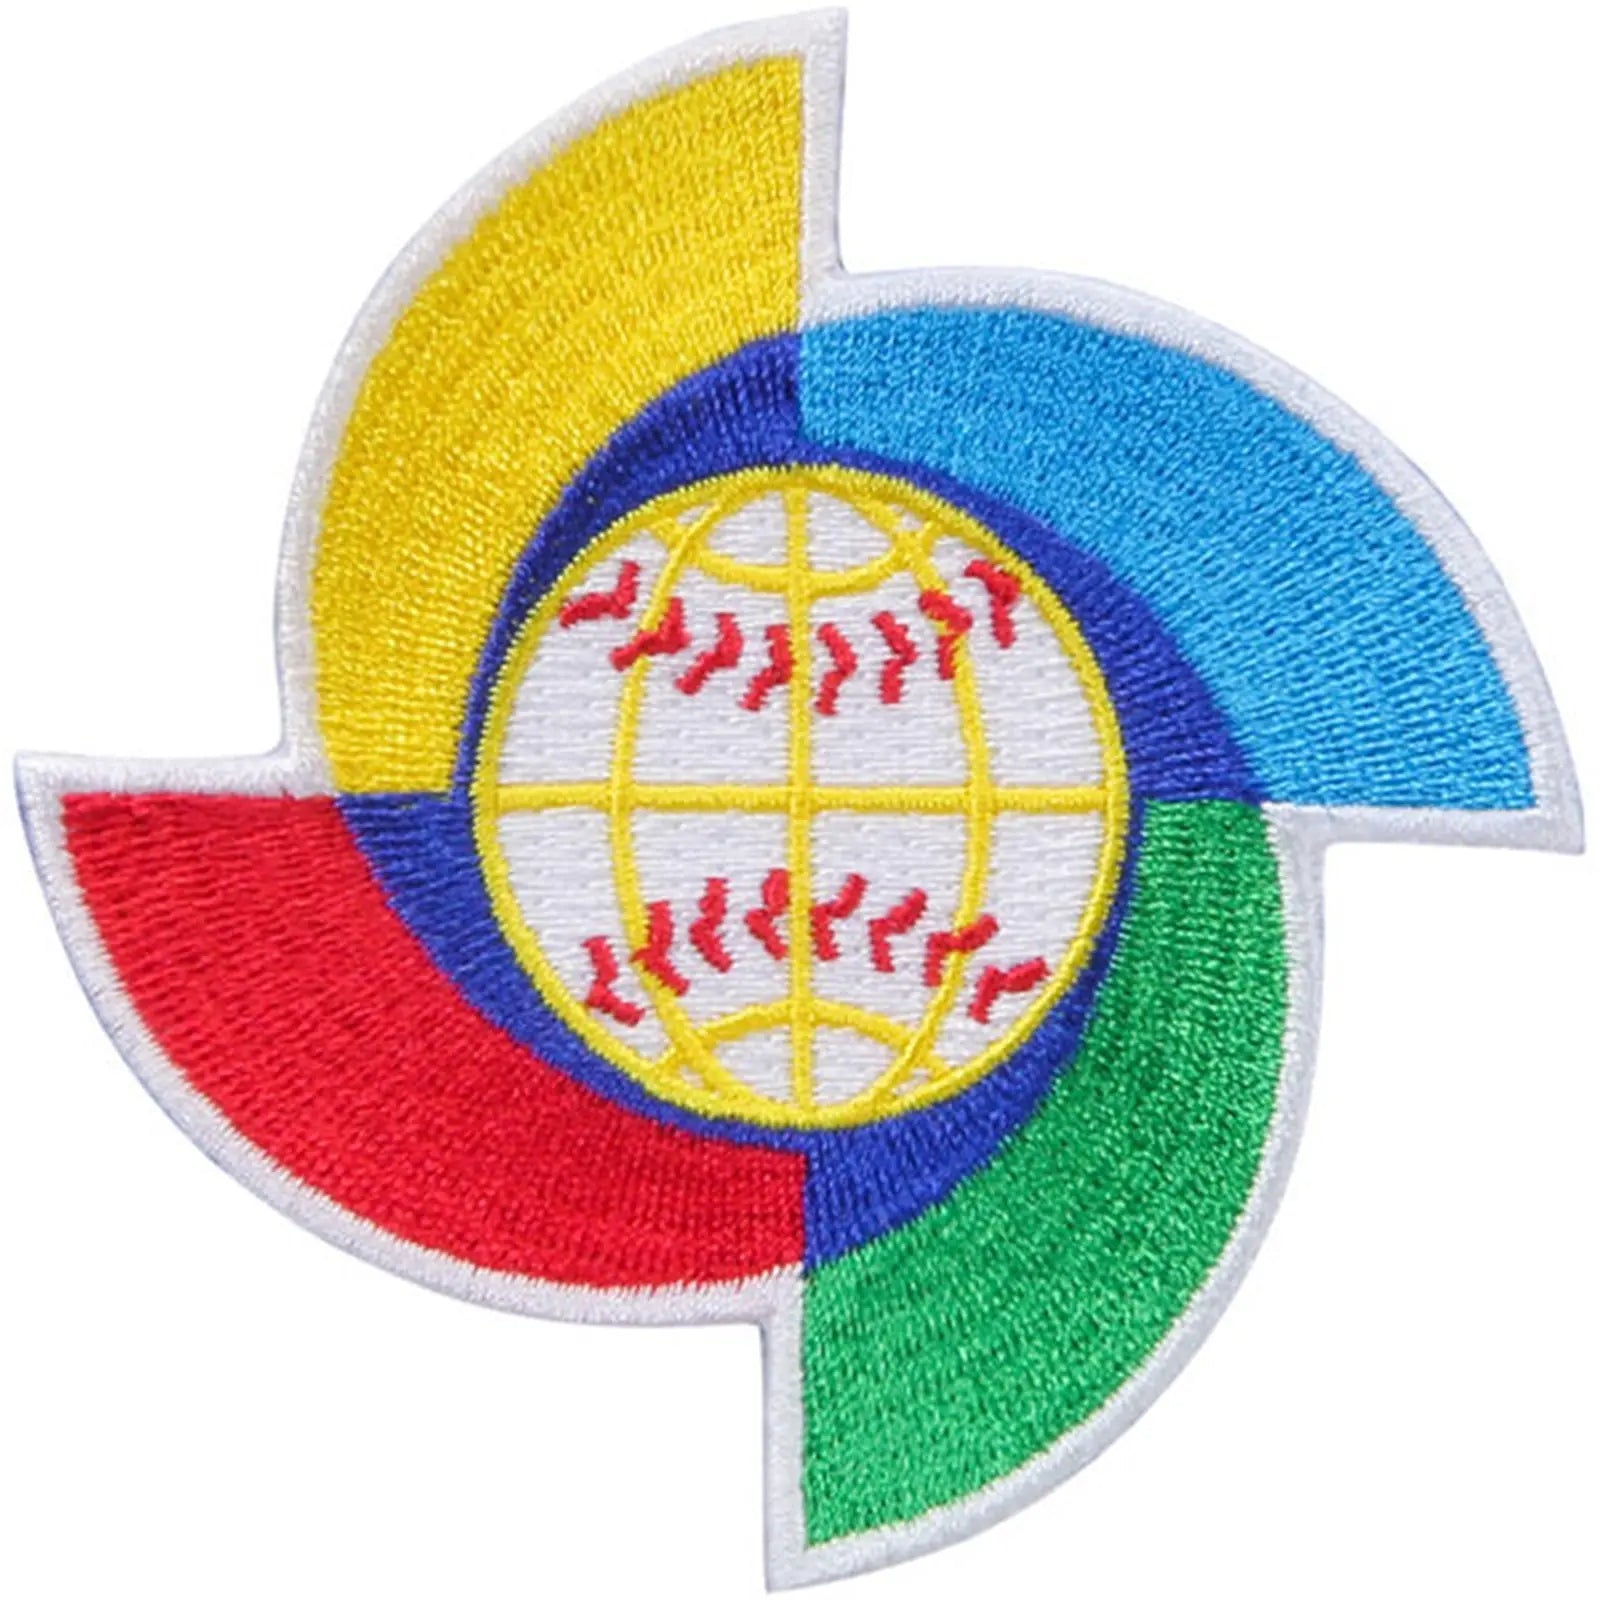 2017 World Baseball Classic Commemorative Patch 